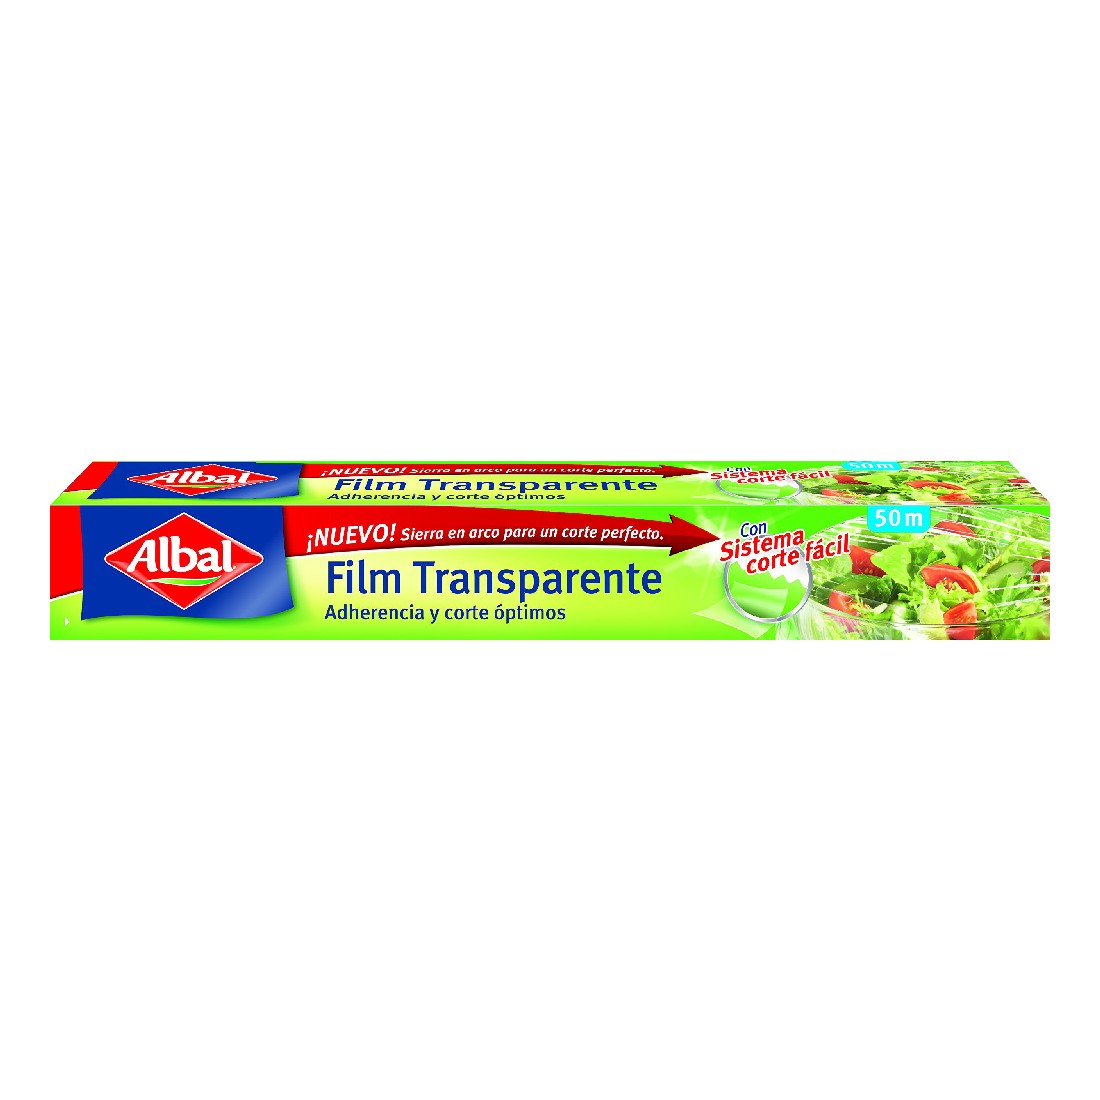 Clingfilm Albal Film Transparente (50 m)